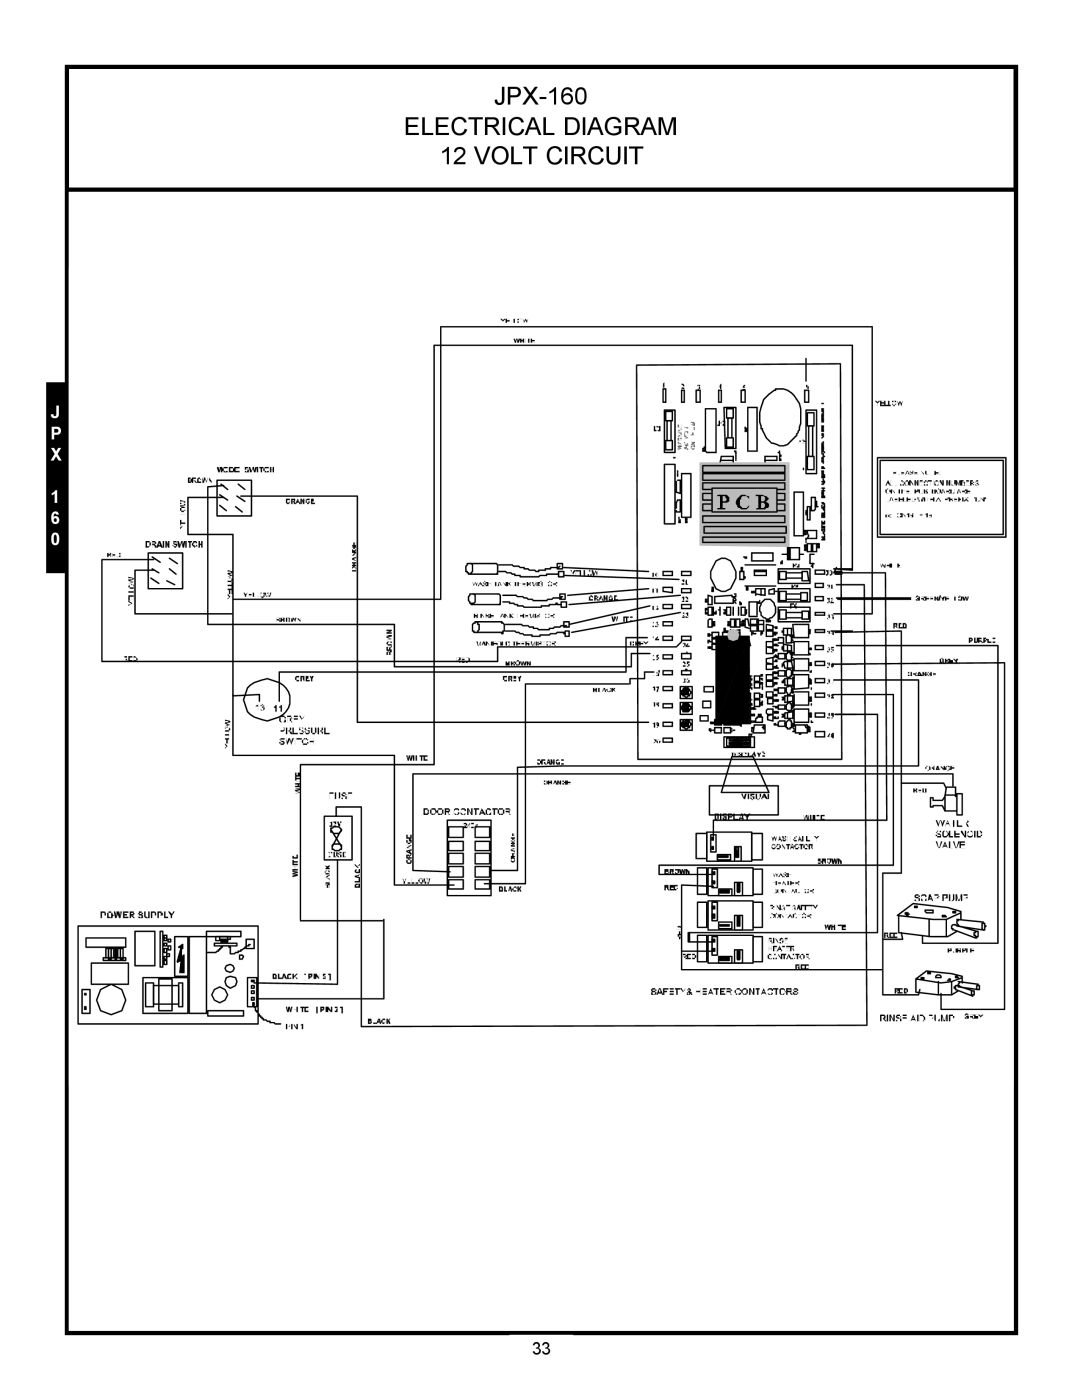 Jackson JPX-200, jpx-140 service manual JPX-160 ELECTRICAL DIAGRAM 12 VOLT CIRCUIT, J P 